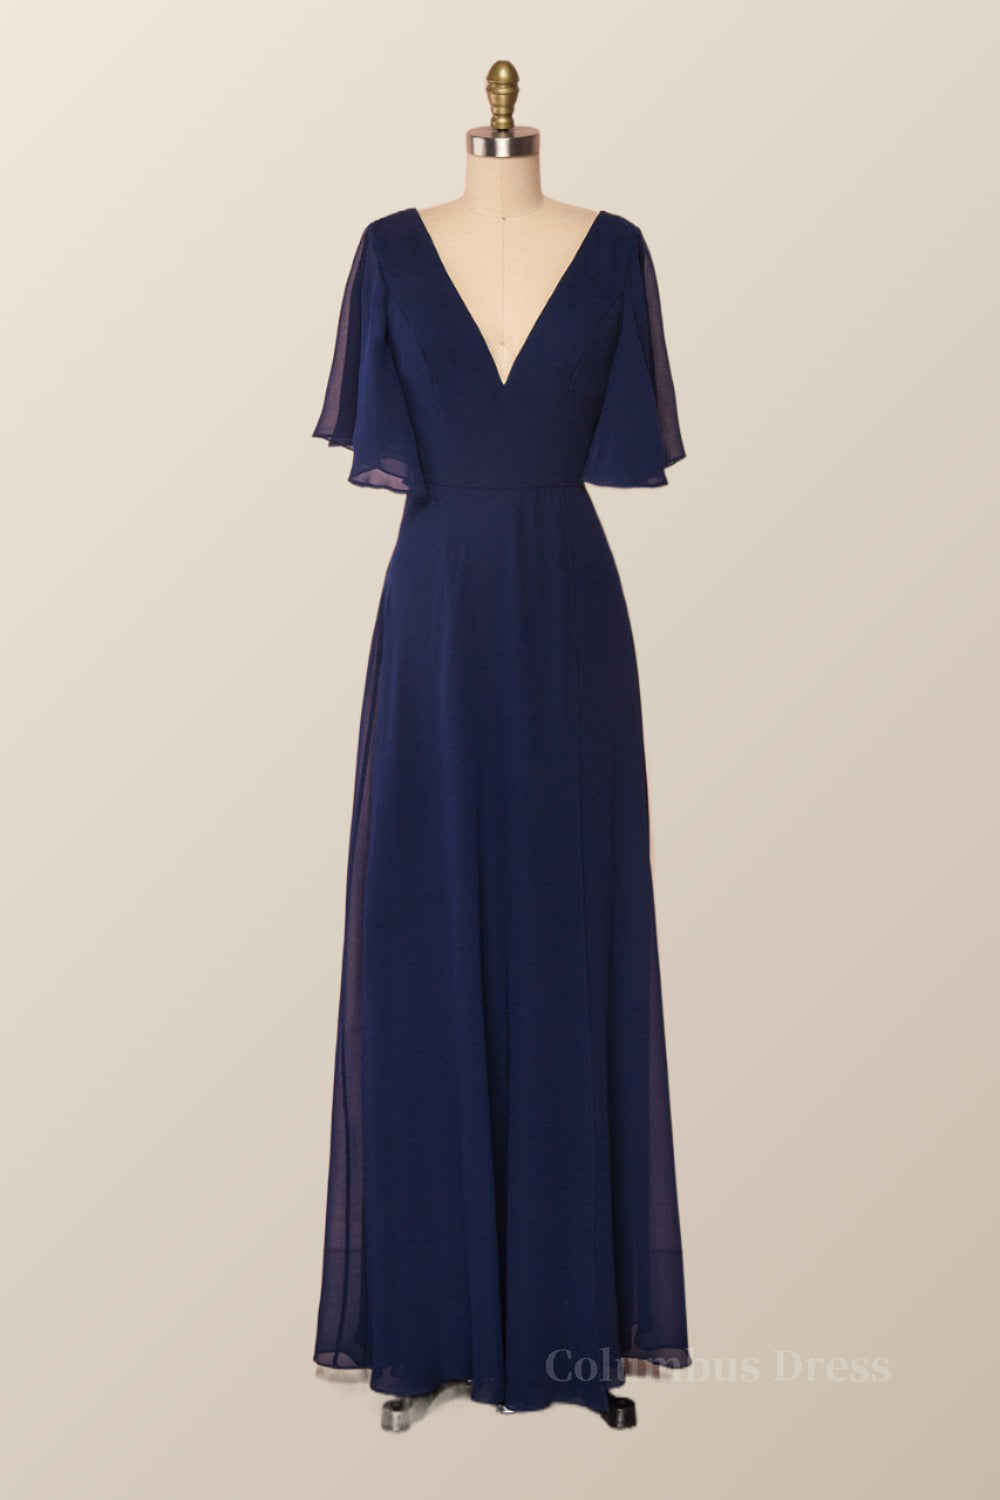 Flare Sleeves Navy Blue Chiffon Long Corset Bridesmaid Dress outfit, Bridesmaid Dresses Inspiration